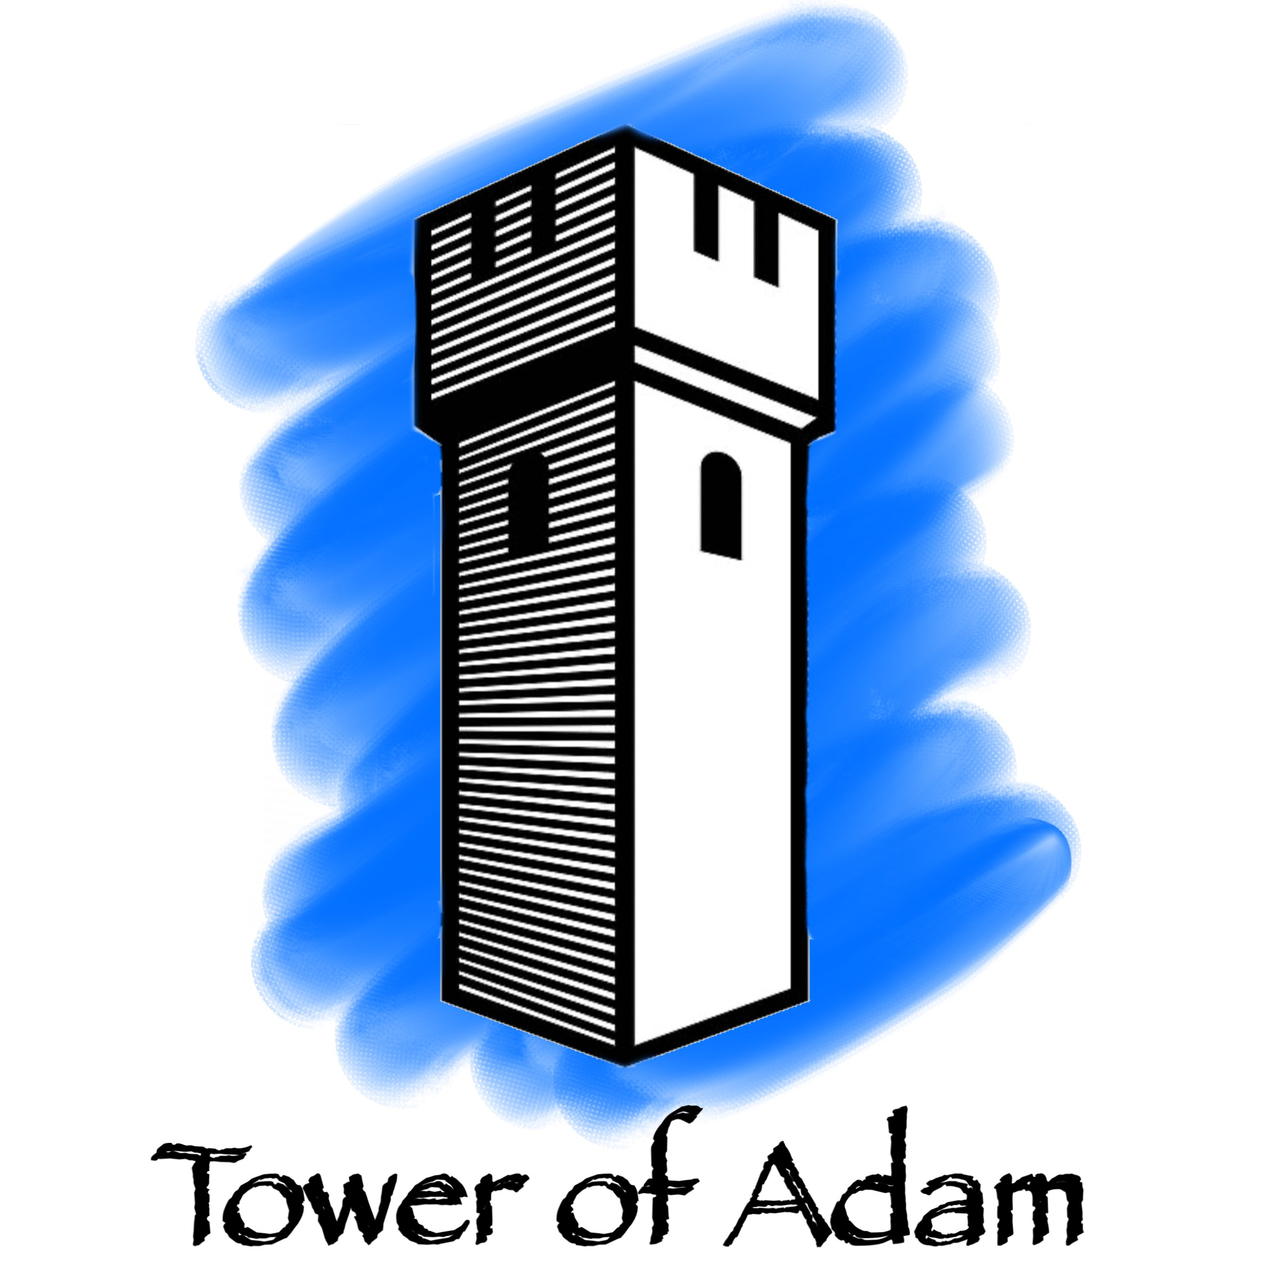 Tower of Adam